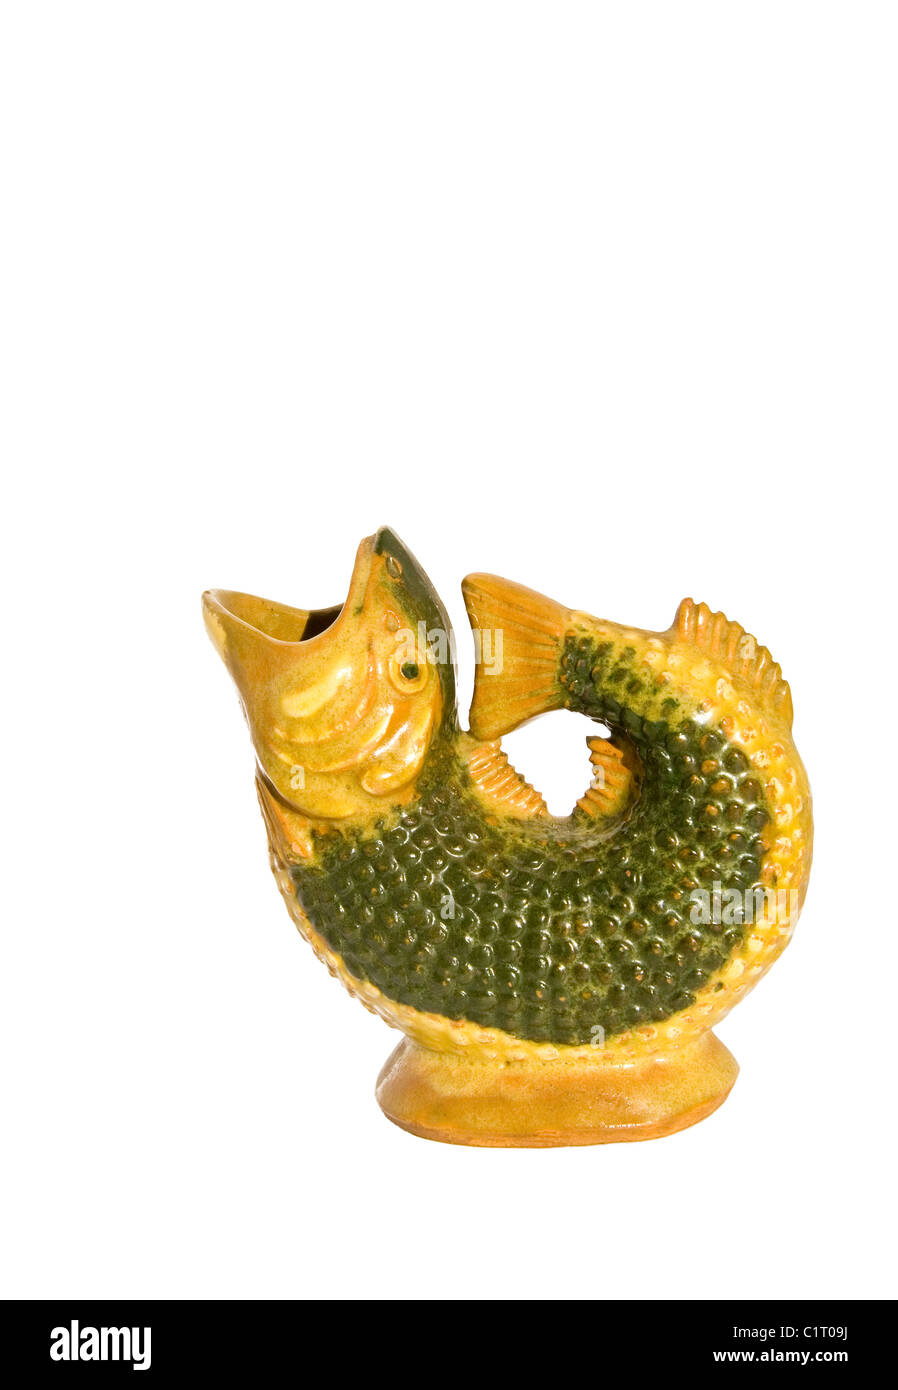 original vintage handmade fish forms ceramic vase Stock Photo